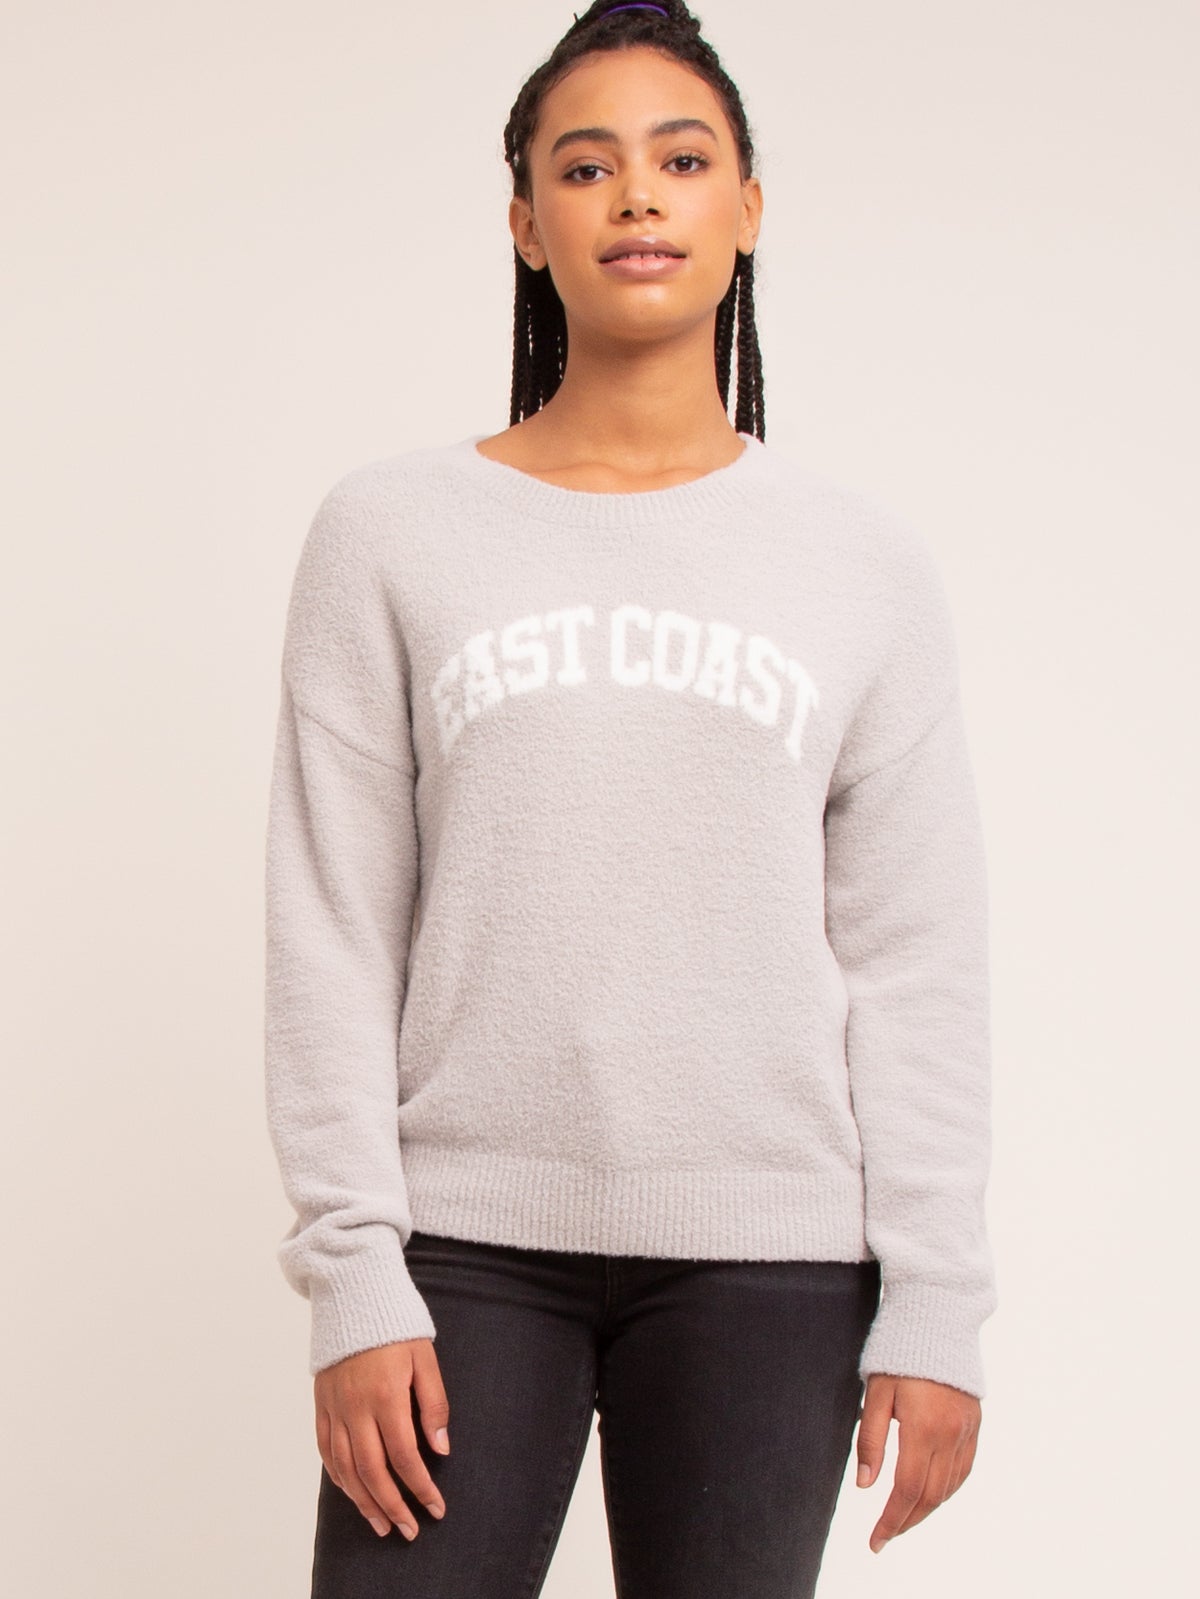 Light Grey "East Coast" Crew Neck Sweater